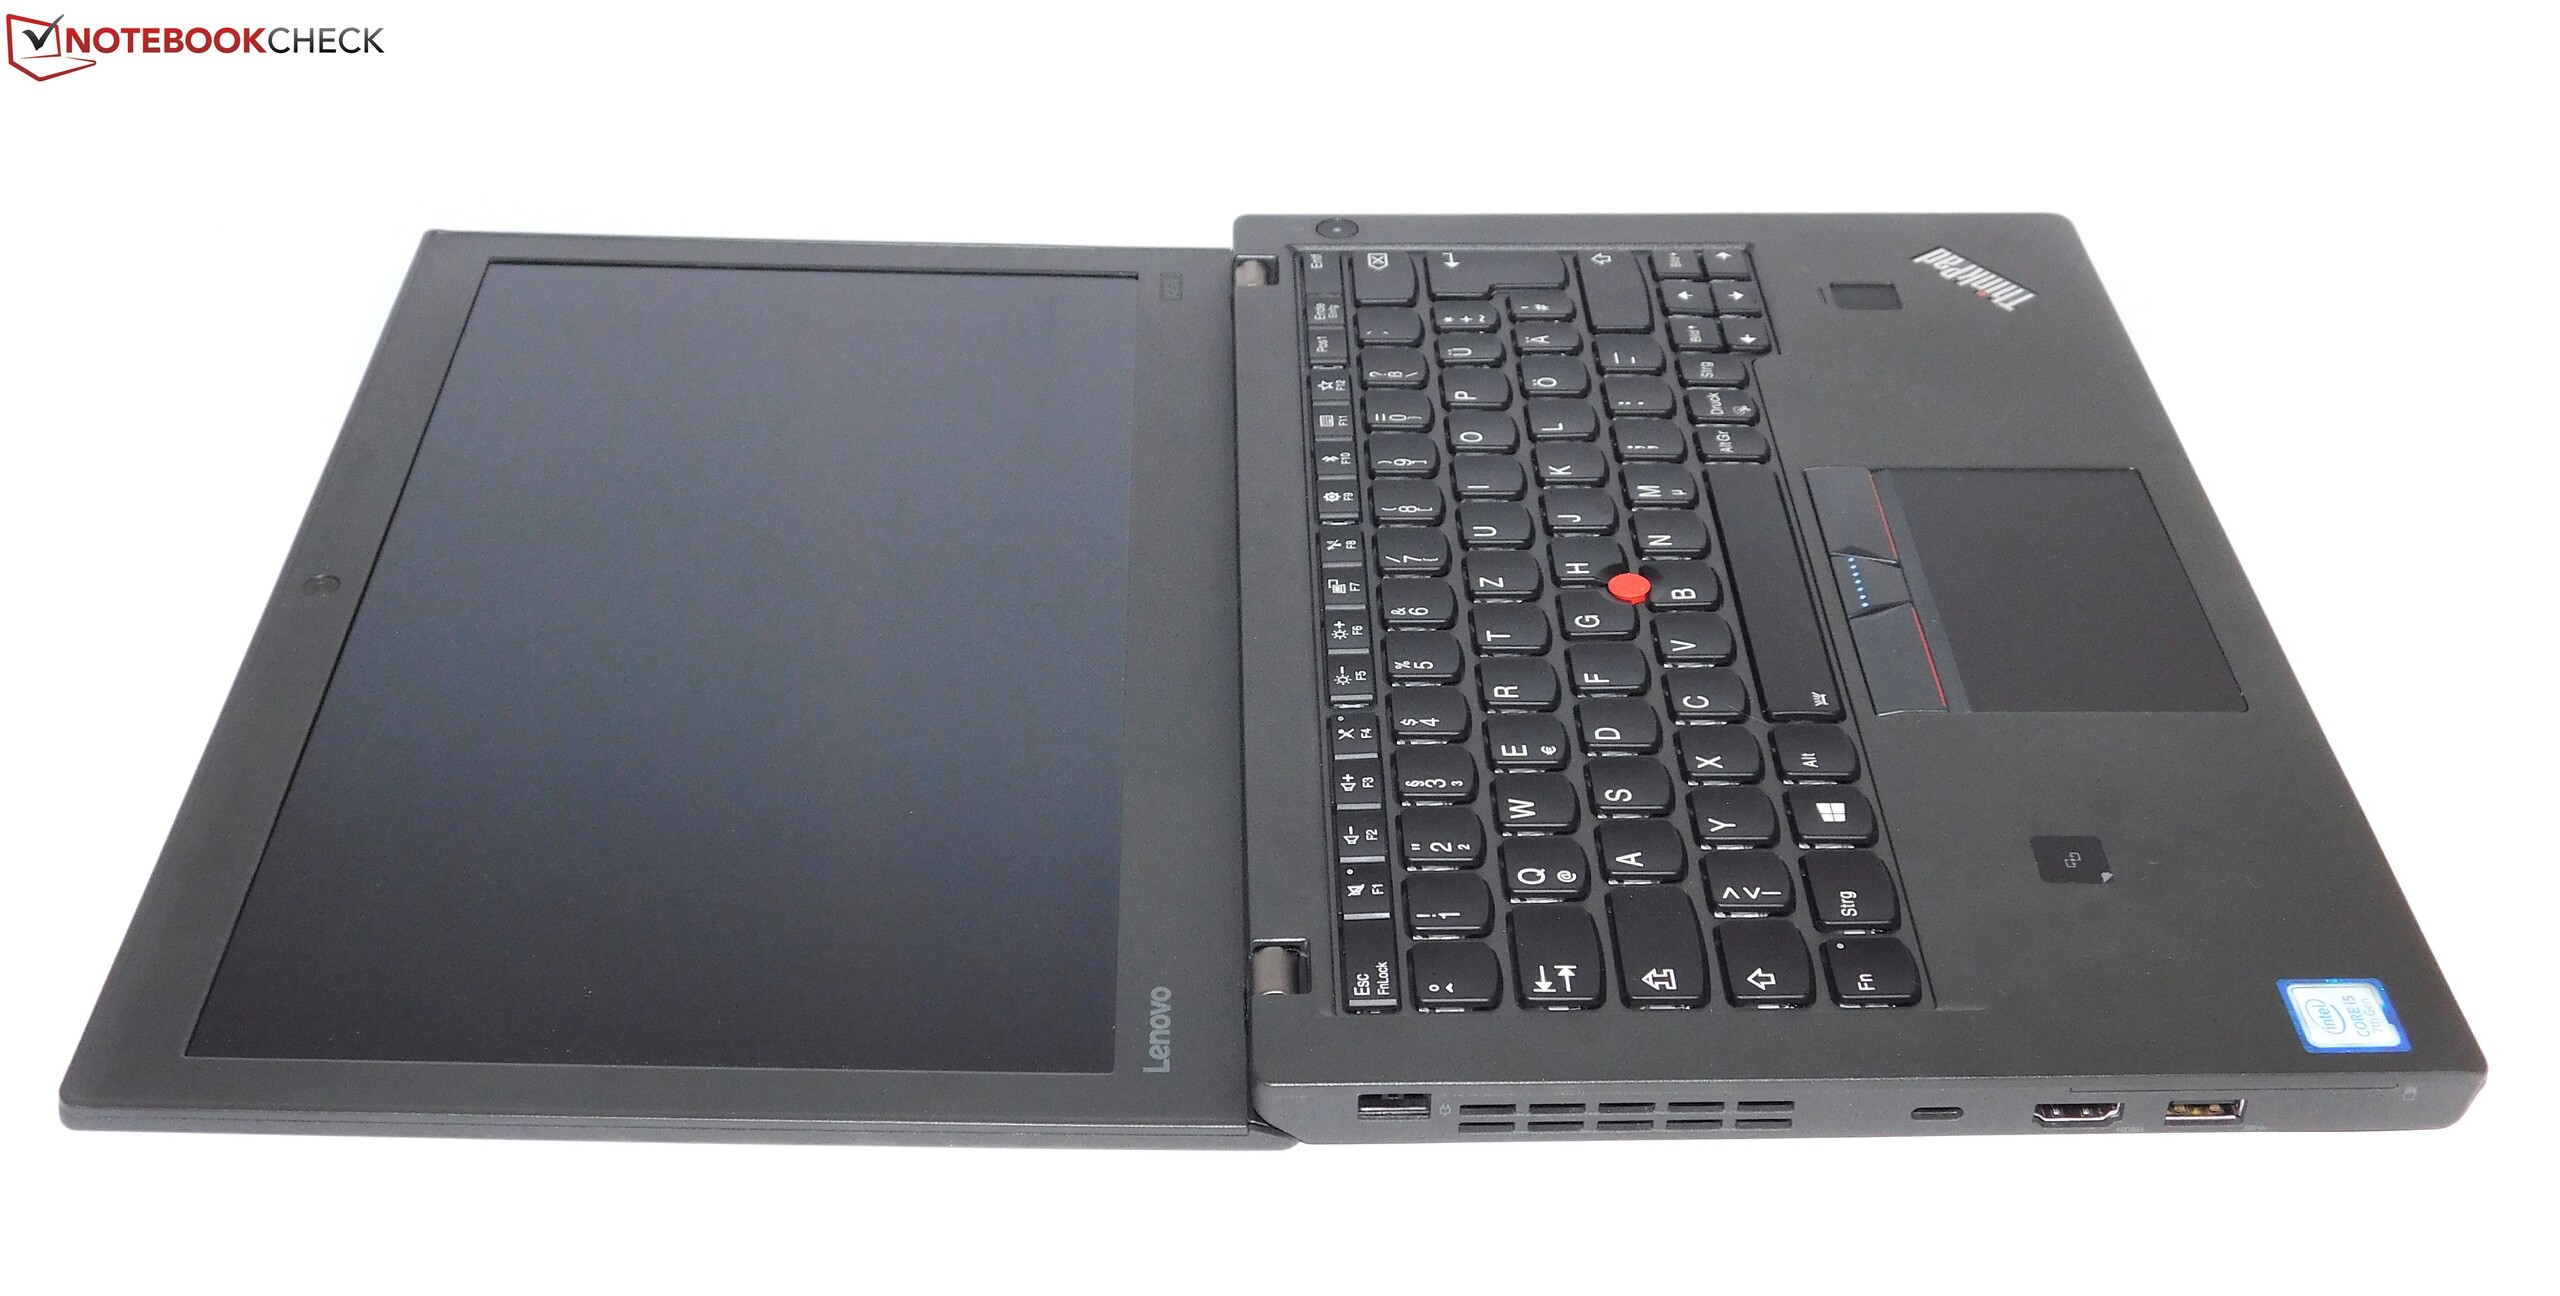 PC/タブレット ノートPC Lenovo ThinkPad X270 (Core i5, Full HD) Laptop Review 